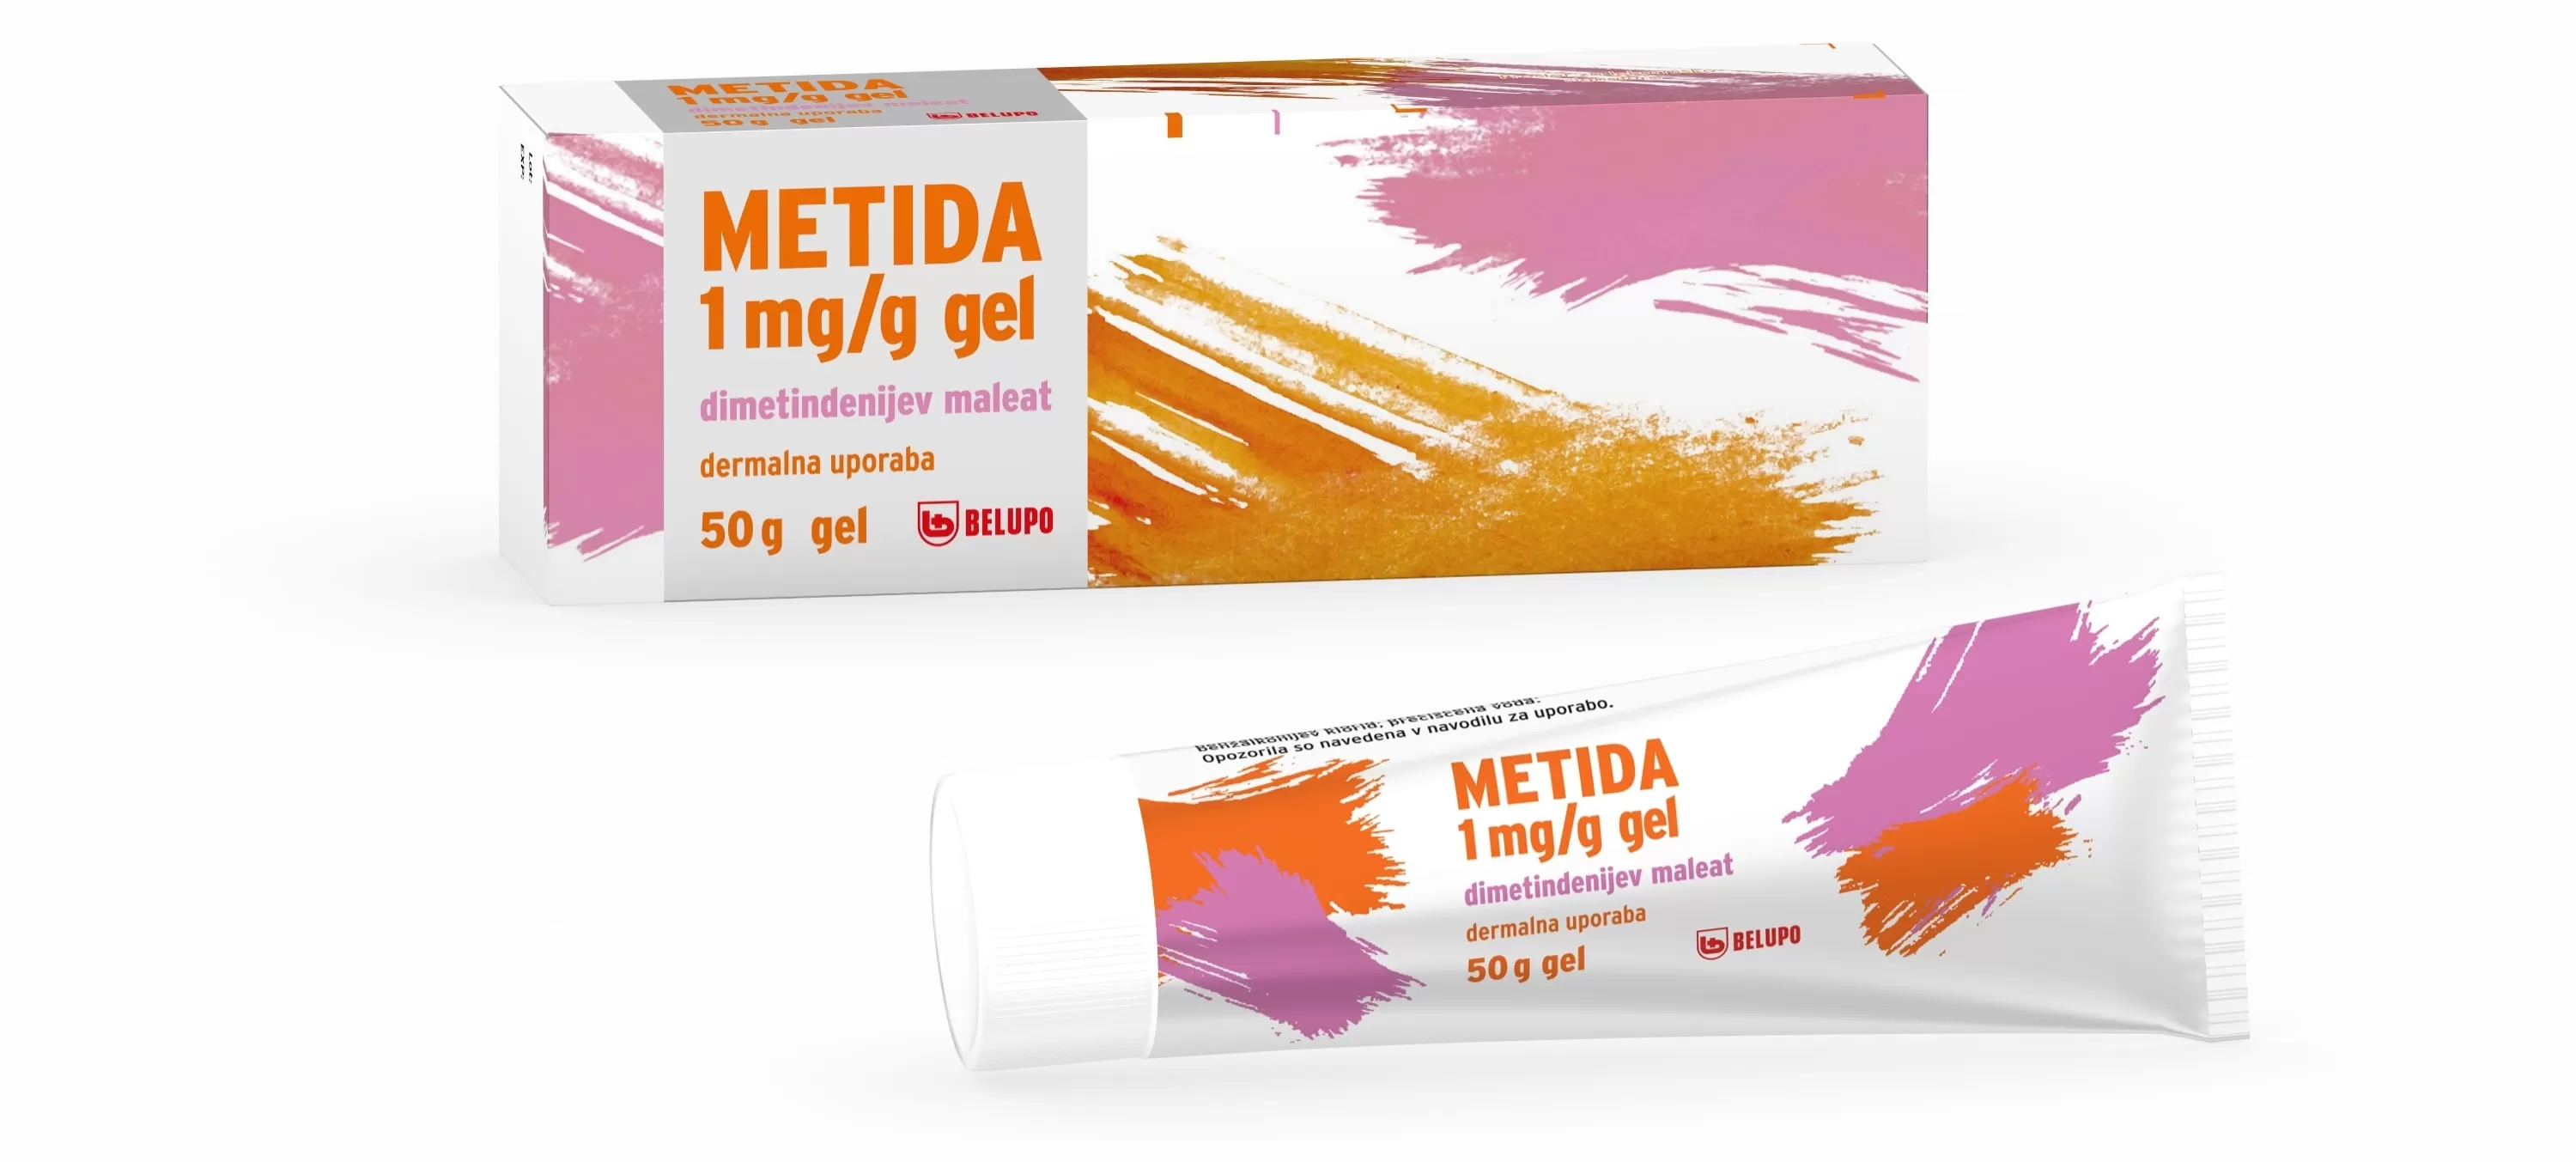 Metida 1 mg/g gel